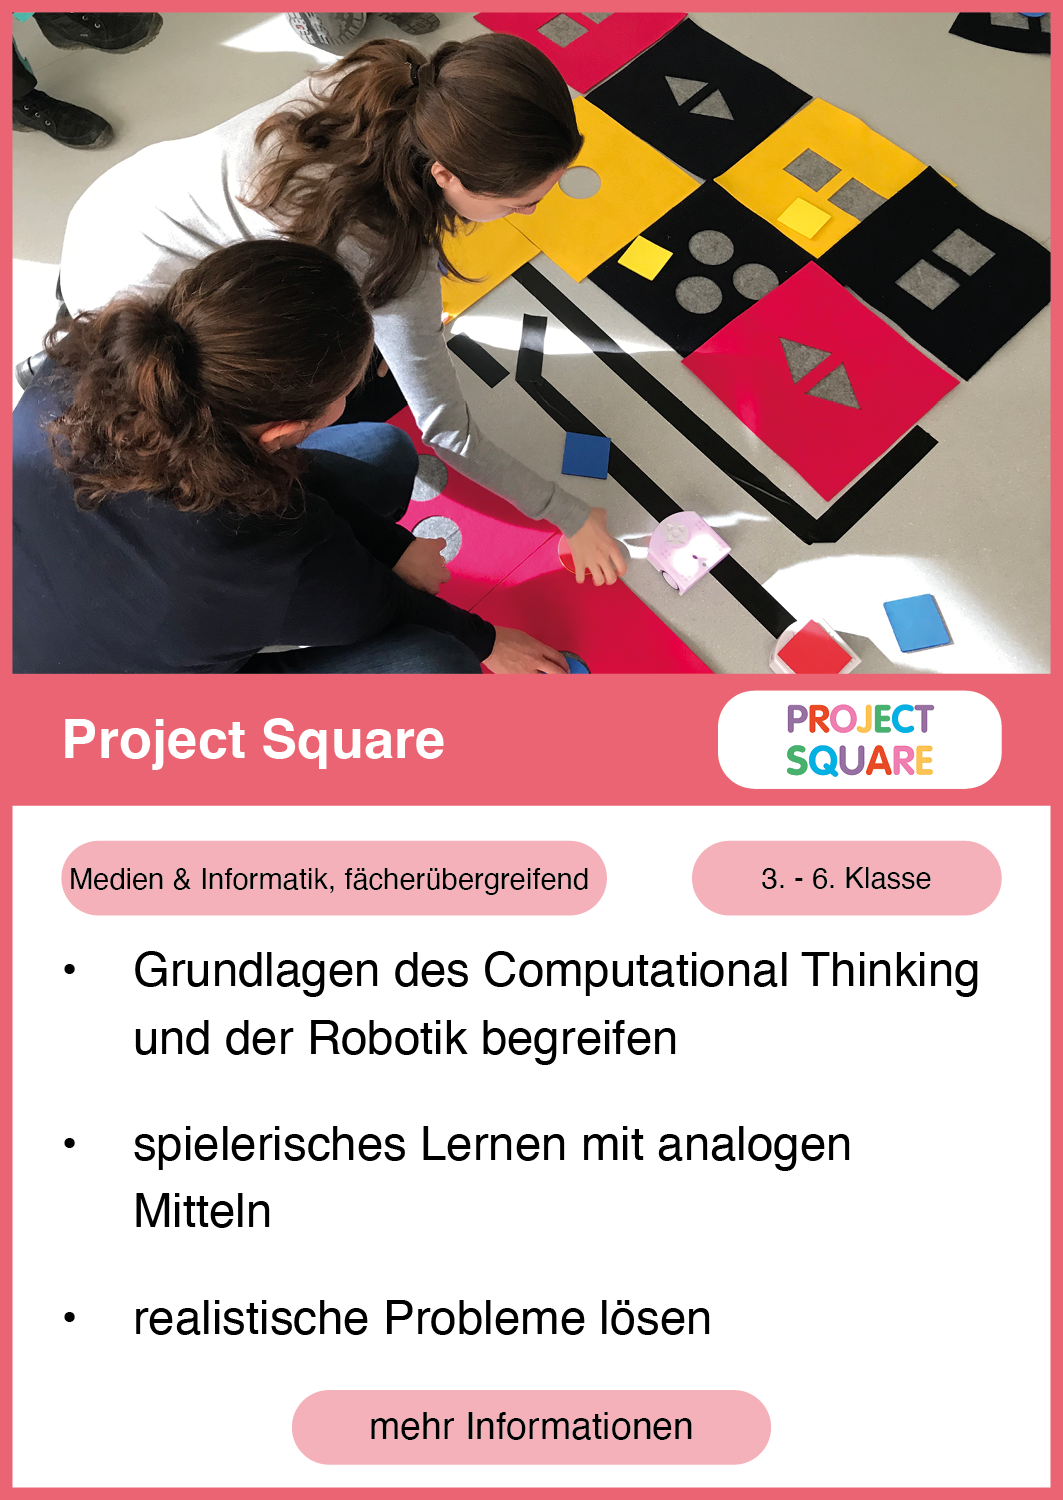 Project Square